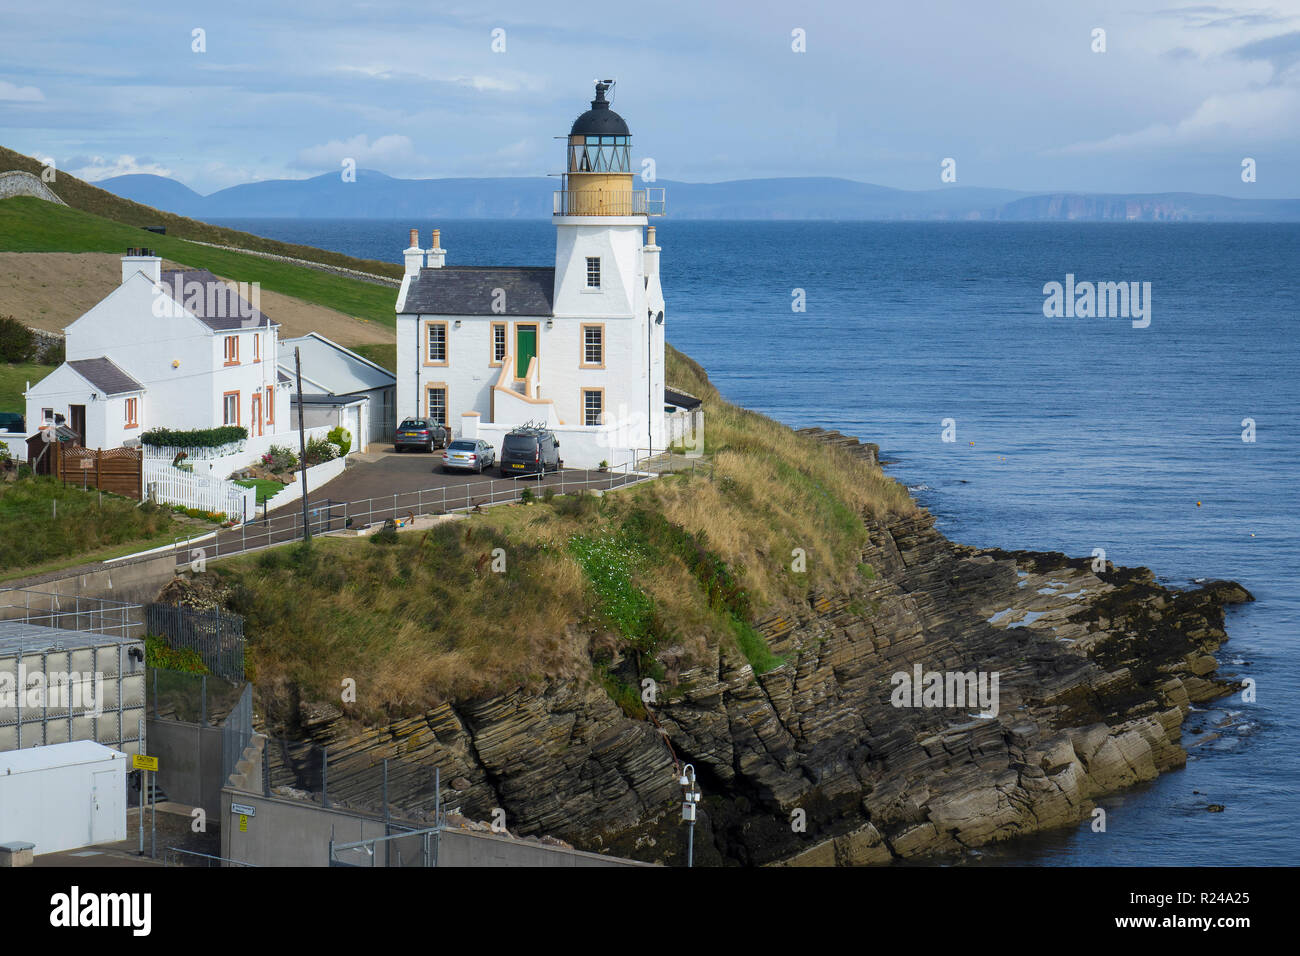 Holborn Head Lighthouse, Scrabster et afficher des lointaines îles Orkney, Caithness, Ecosse, Royaume-Uni, Europe Banque D'Images